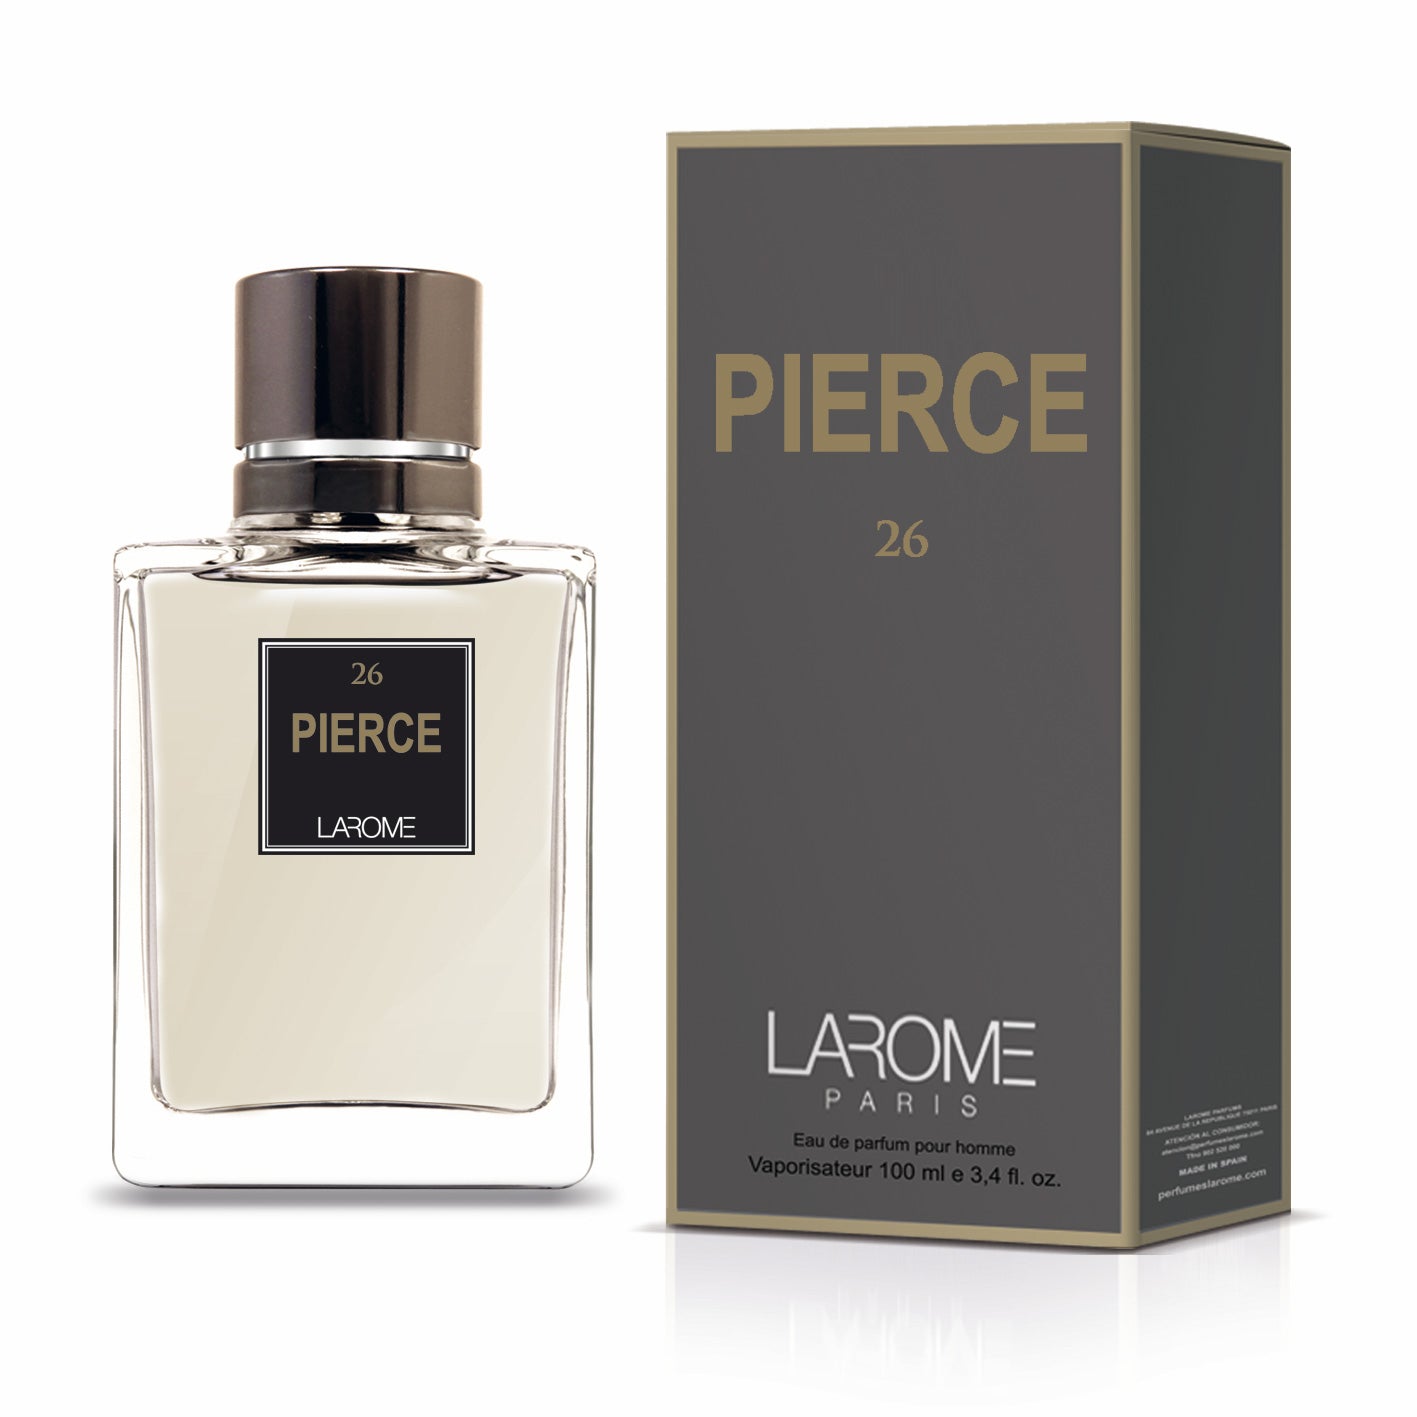 Pierce 26M by Larome geïnspireerd door Fierce Cologne